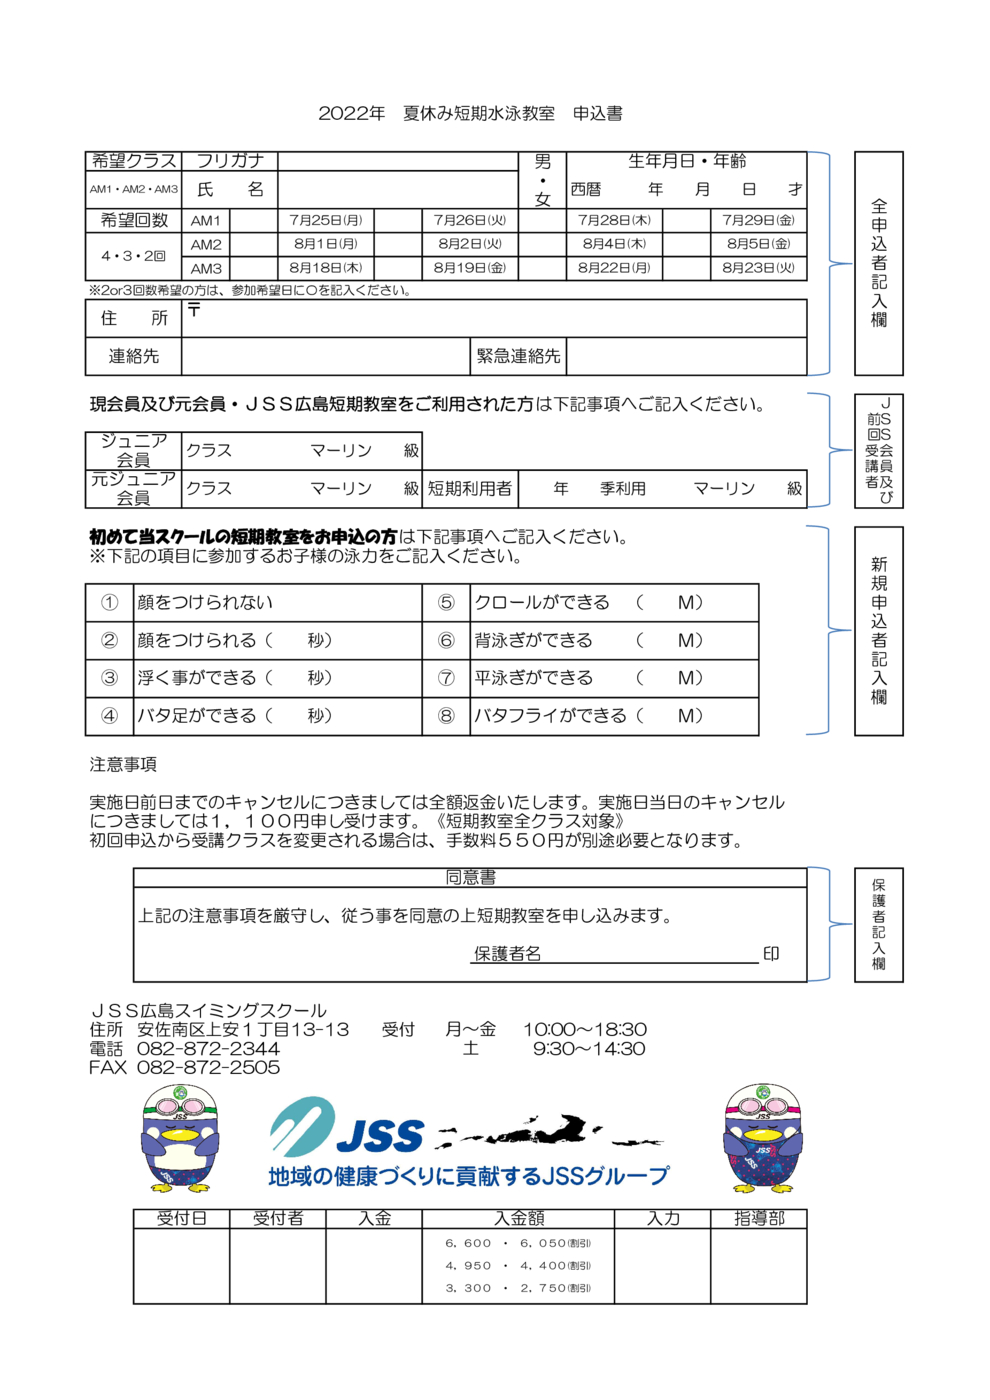 JSS広島_2022夏季短期申込書_AM